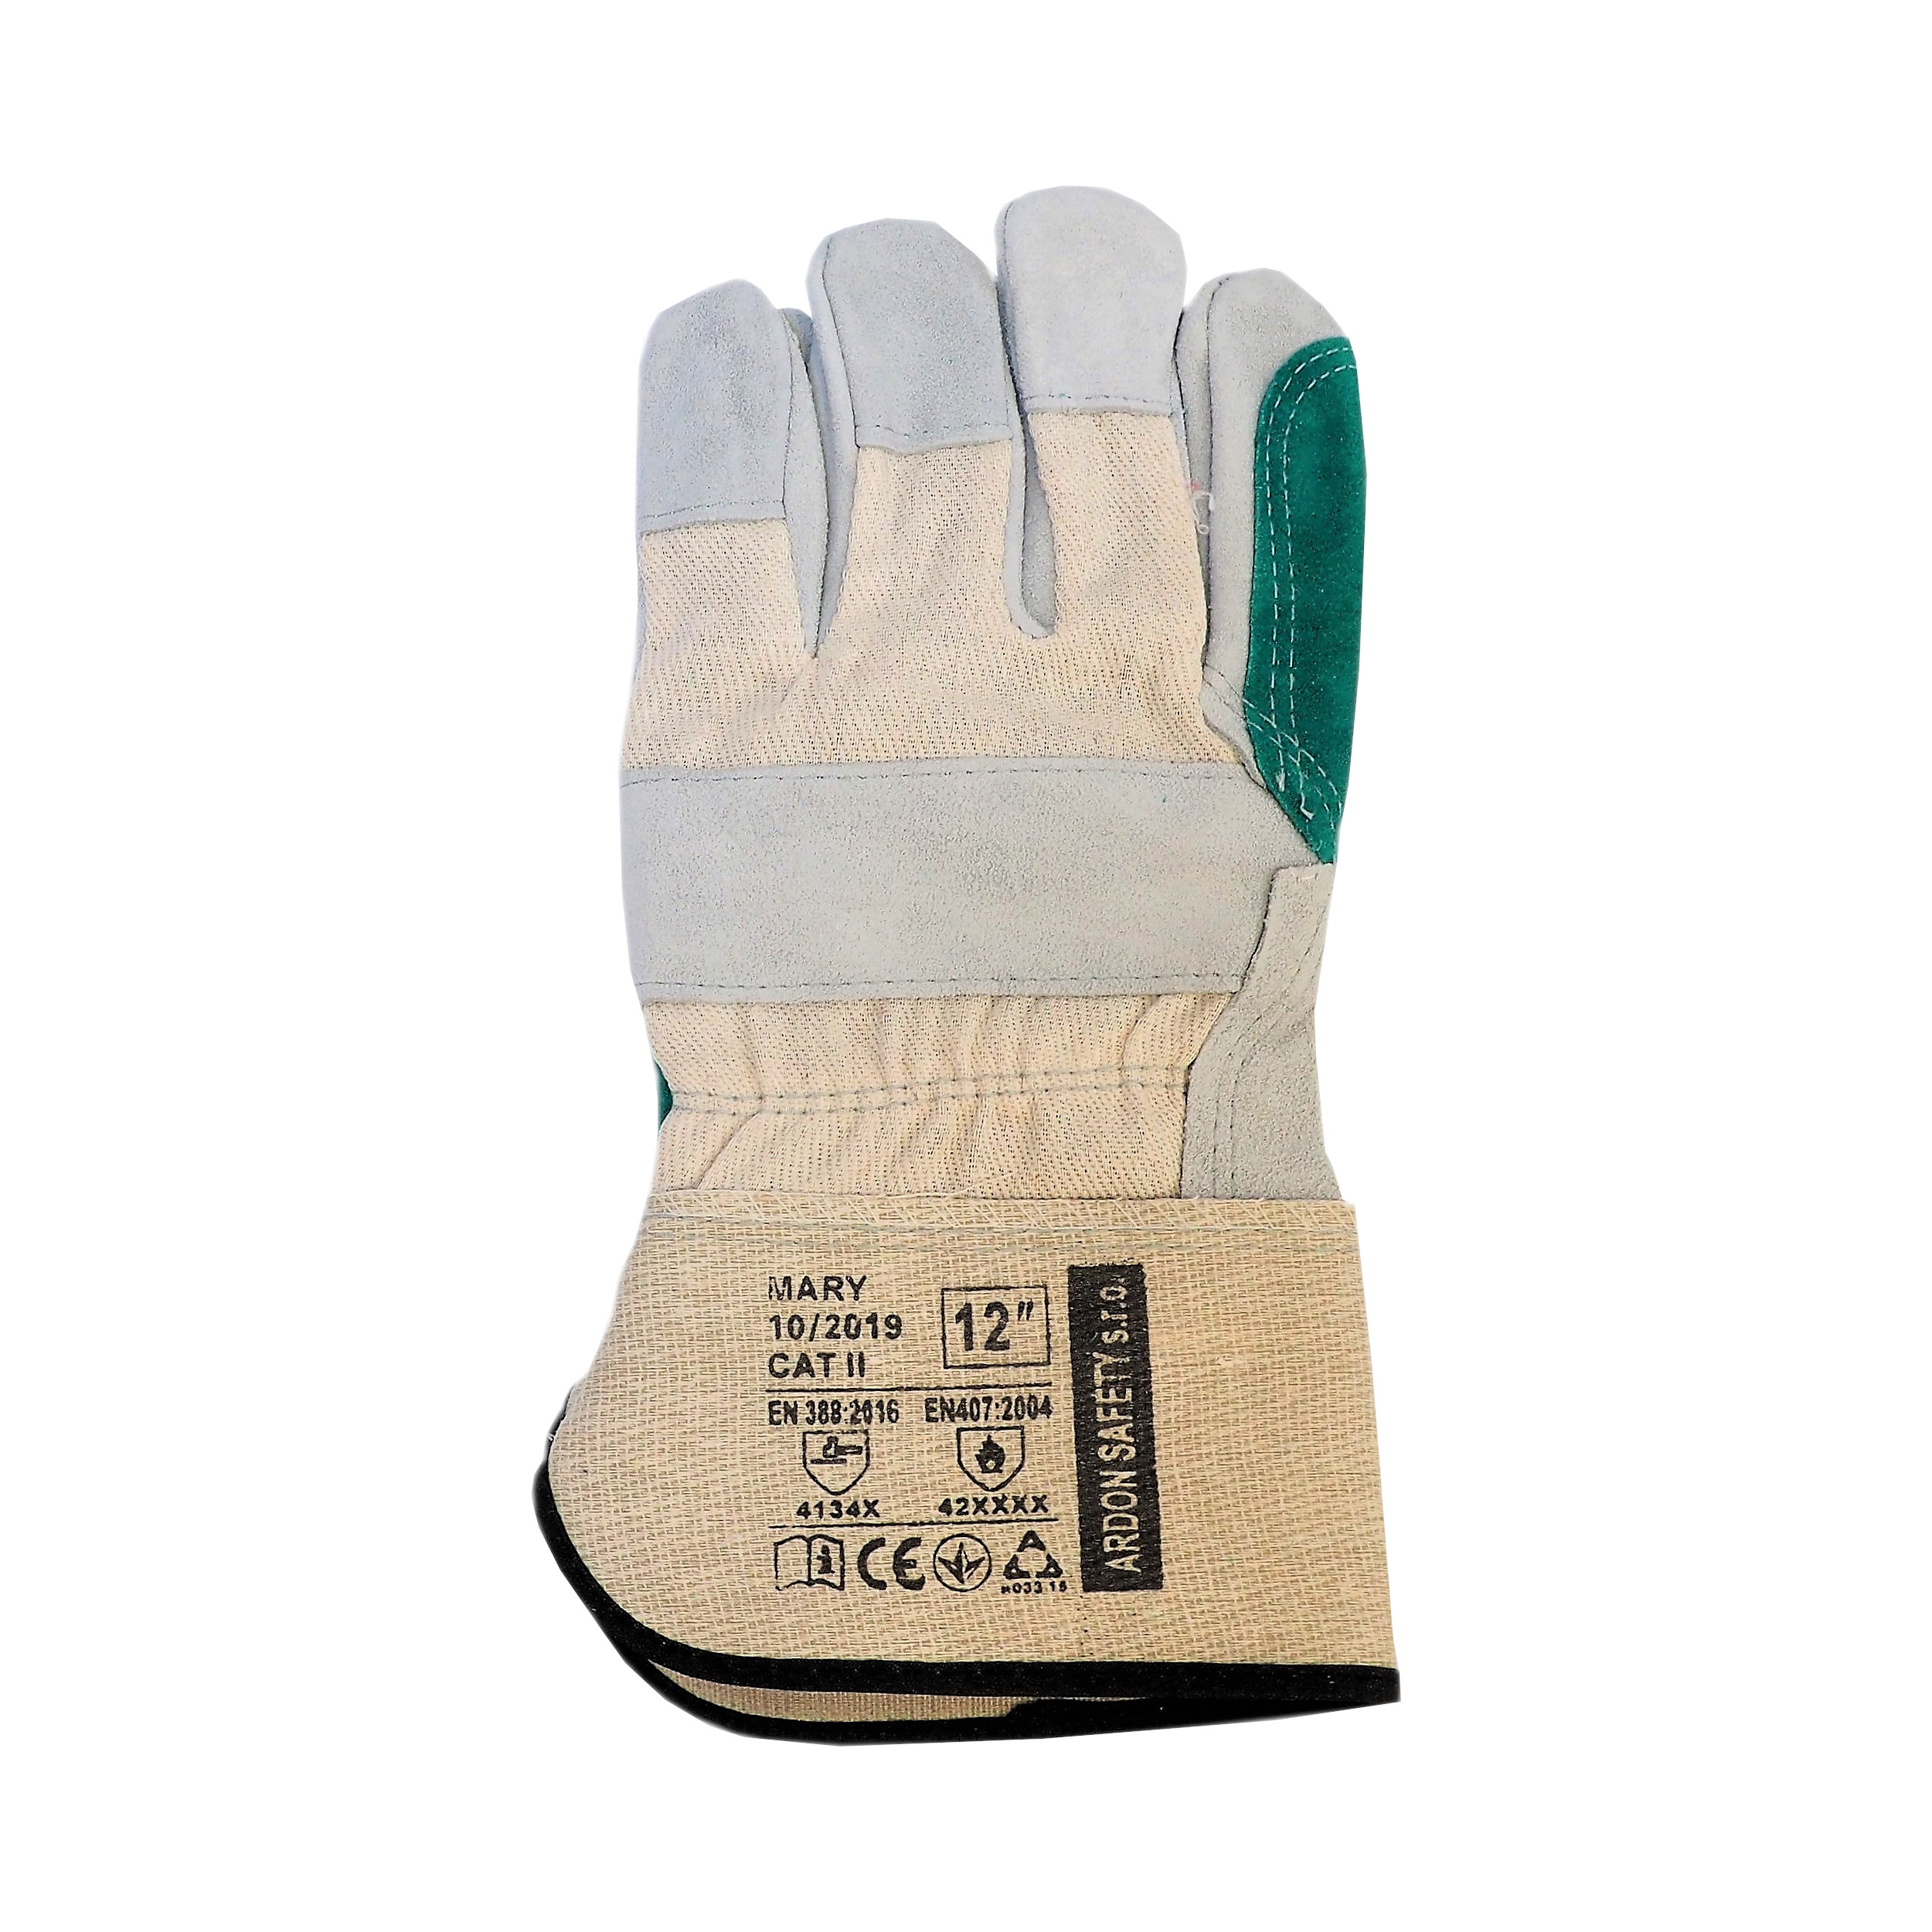 rukavice MARY, kožené, velikost 12 0.29 Kg TOP Sklad4 600128 50